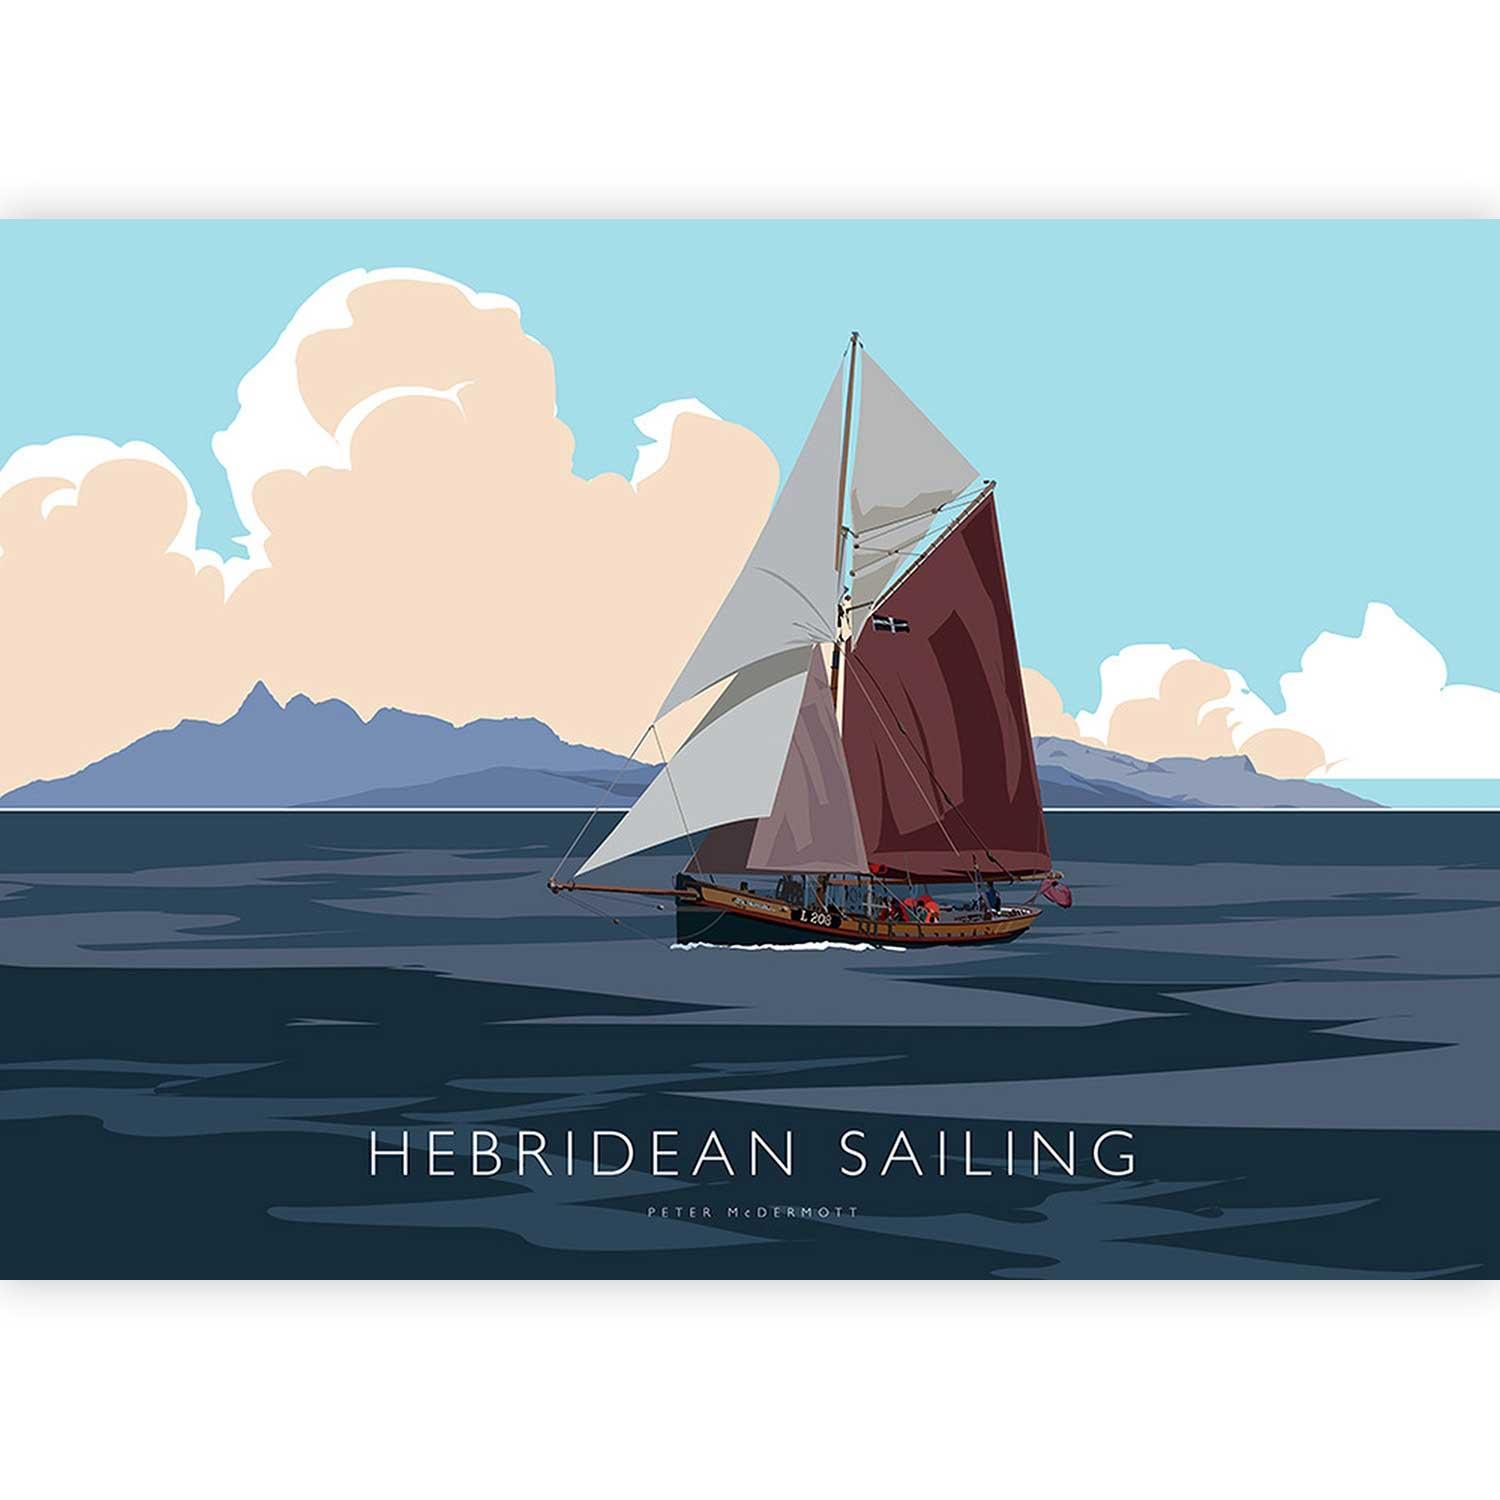 Hebridean Sailing by Peter McDermott